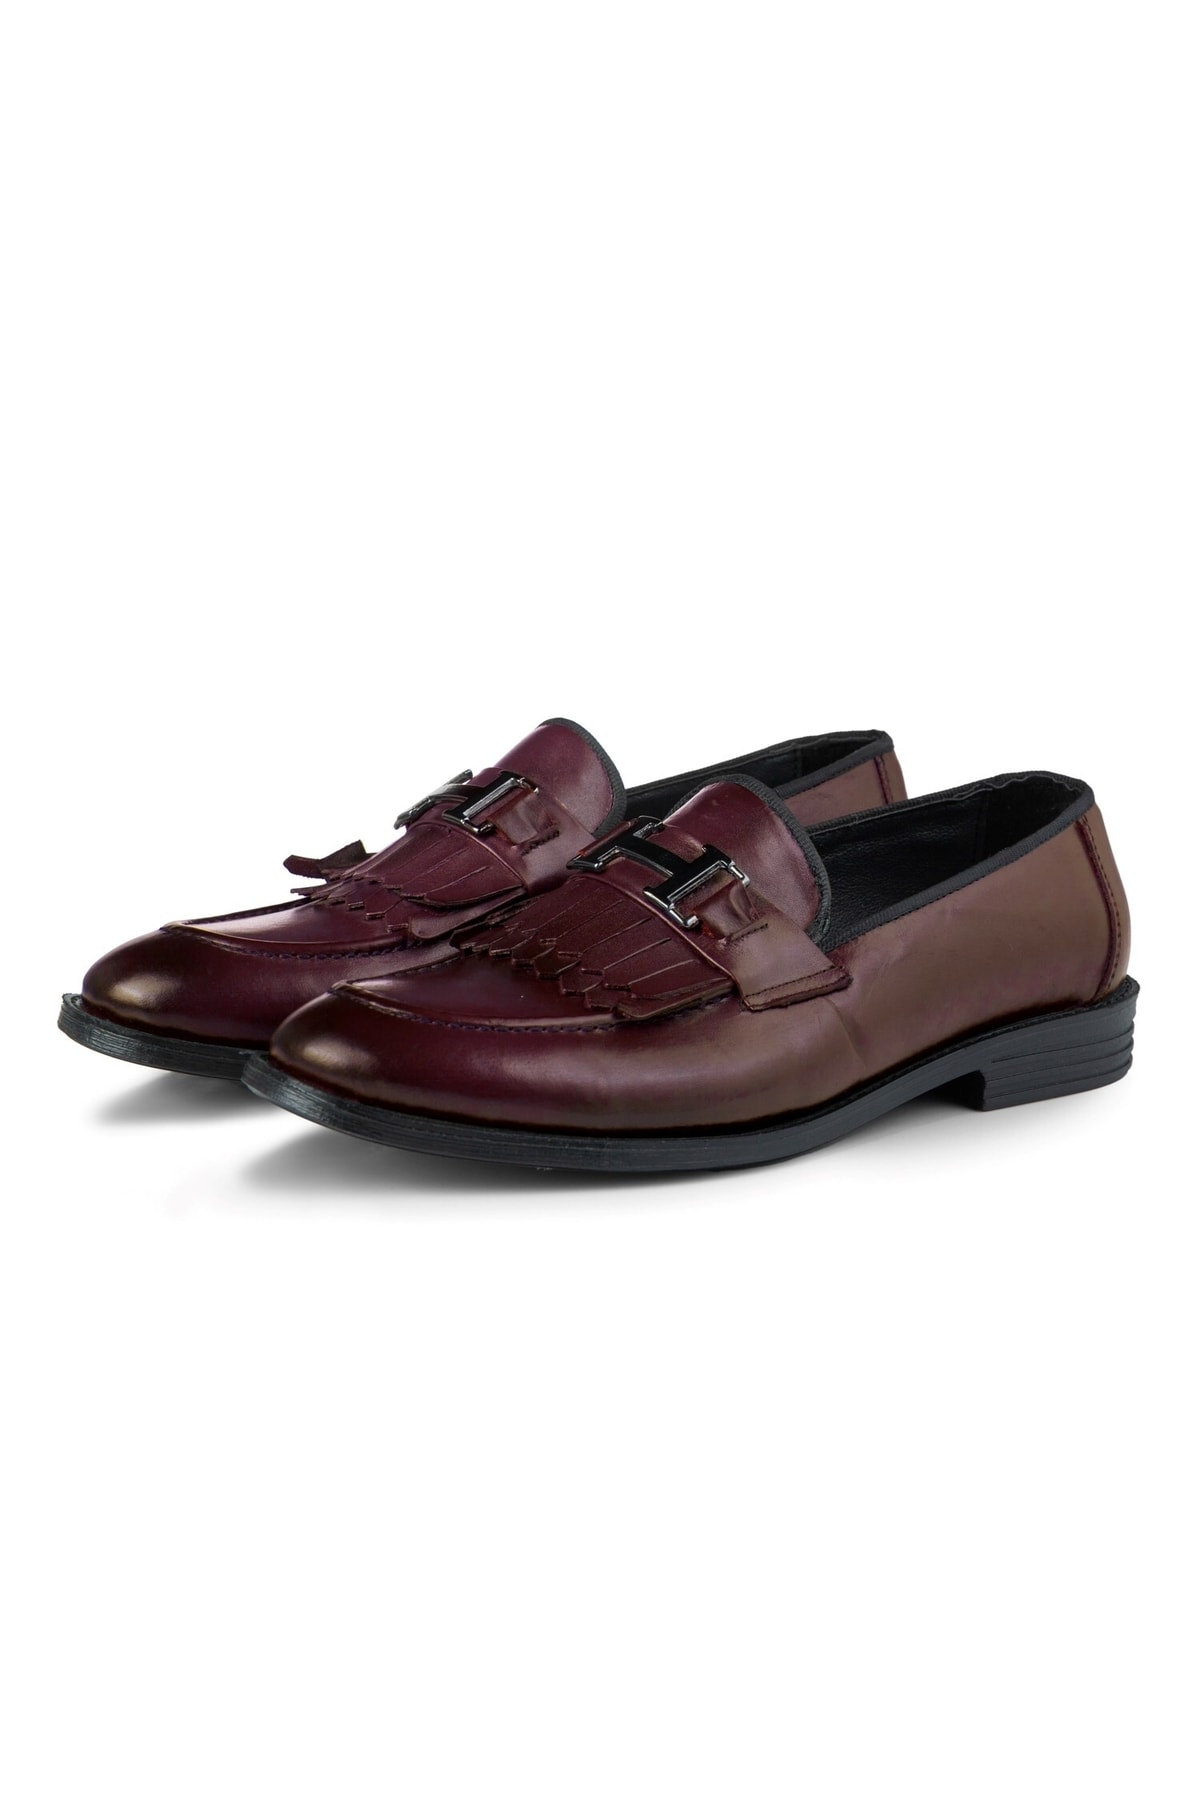 Ducavelli Legion Hakiki Deri Erkek Klasik Ayakkabı, Loafer Klasik Ayakkabı, Makosen Ayakkabı